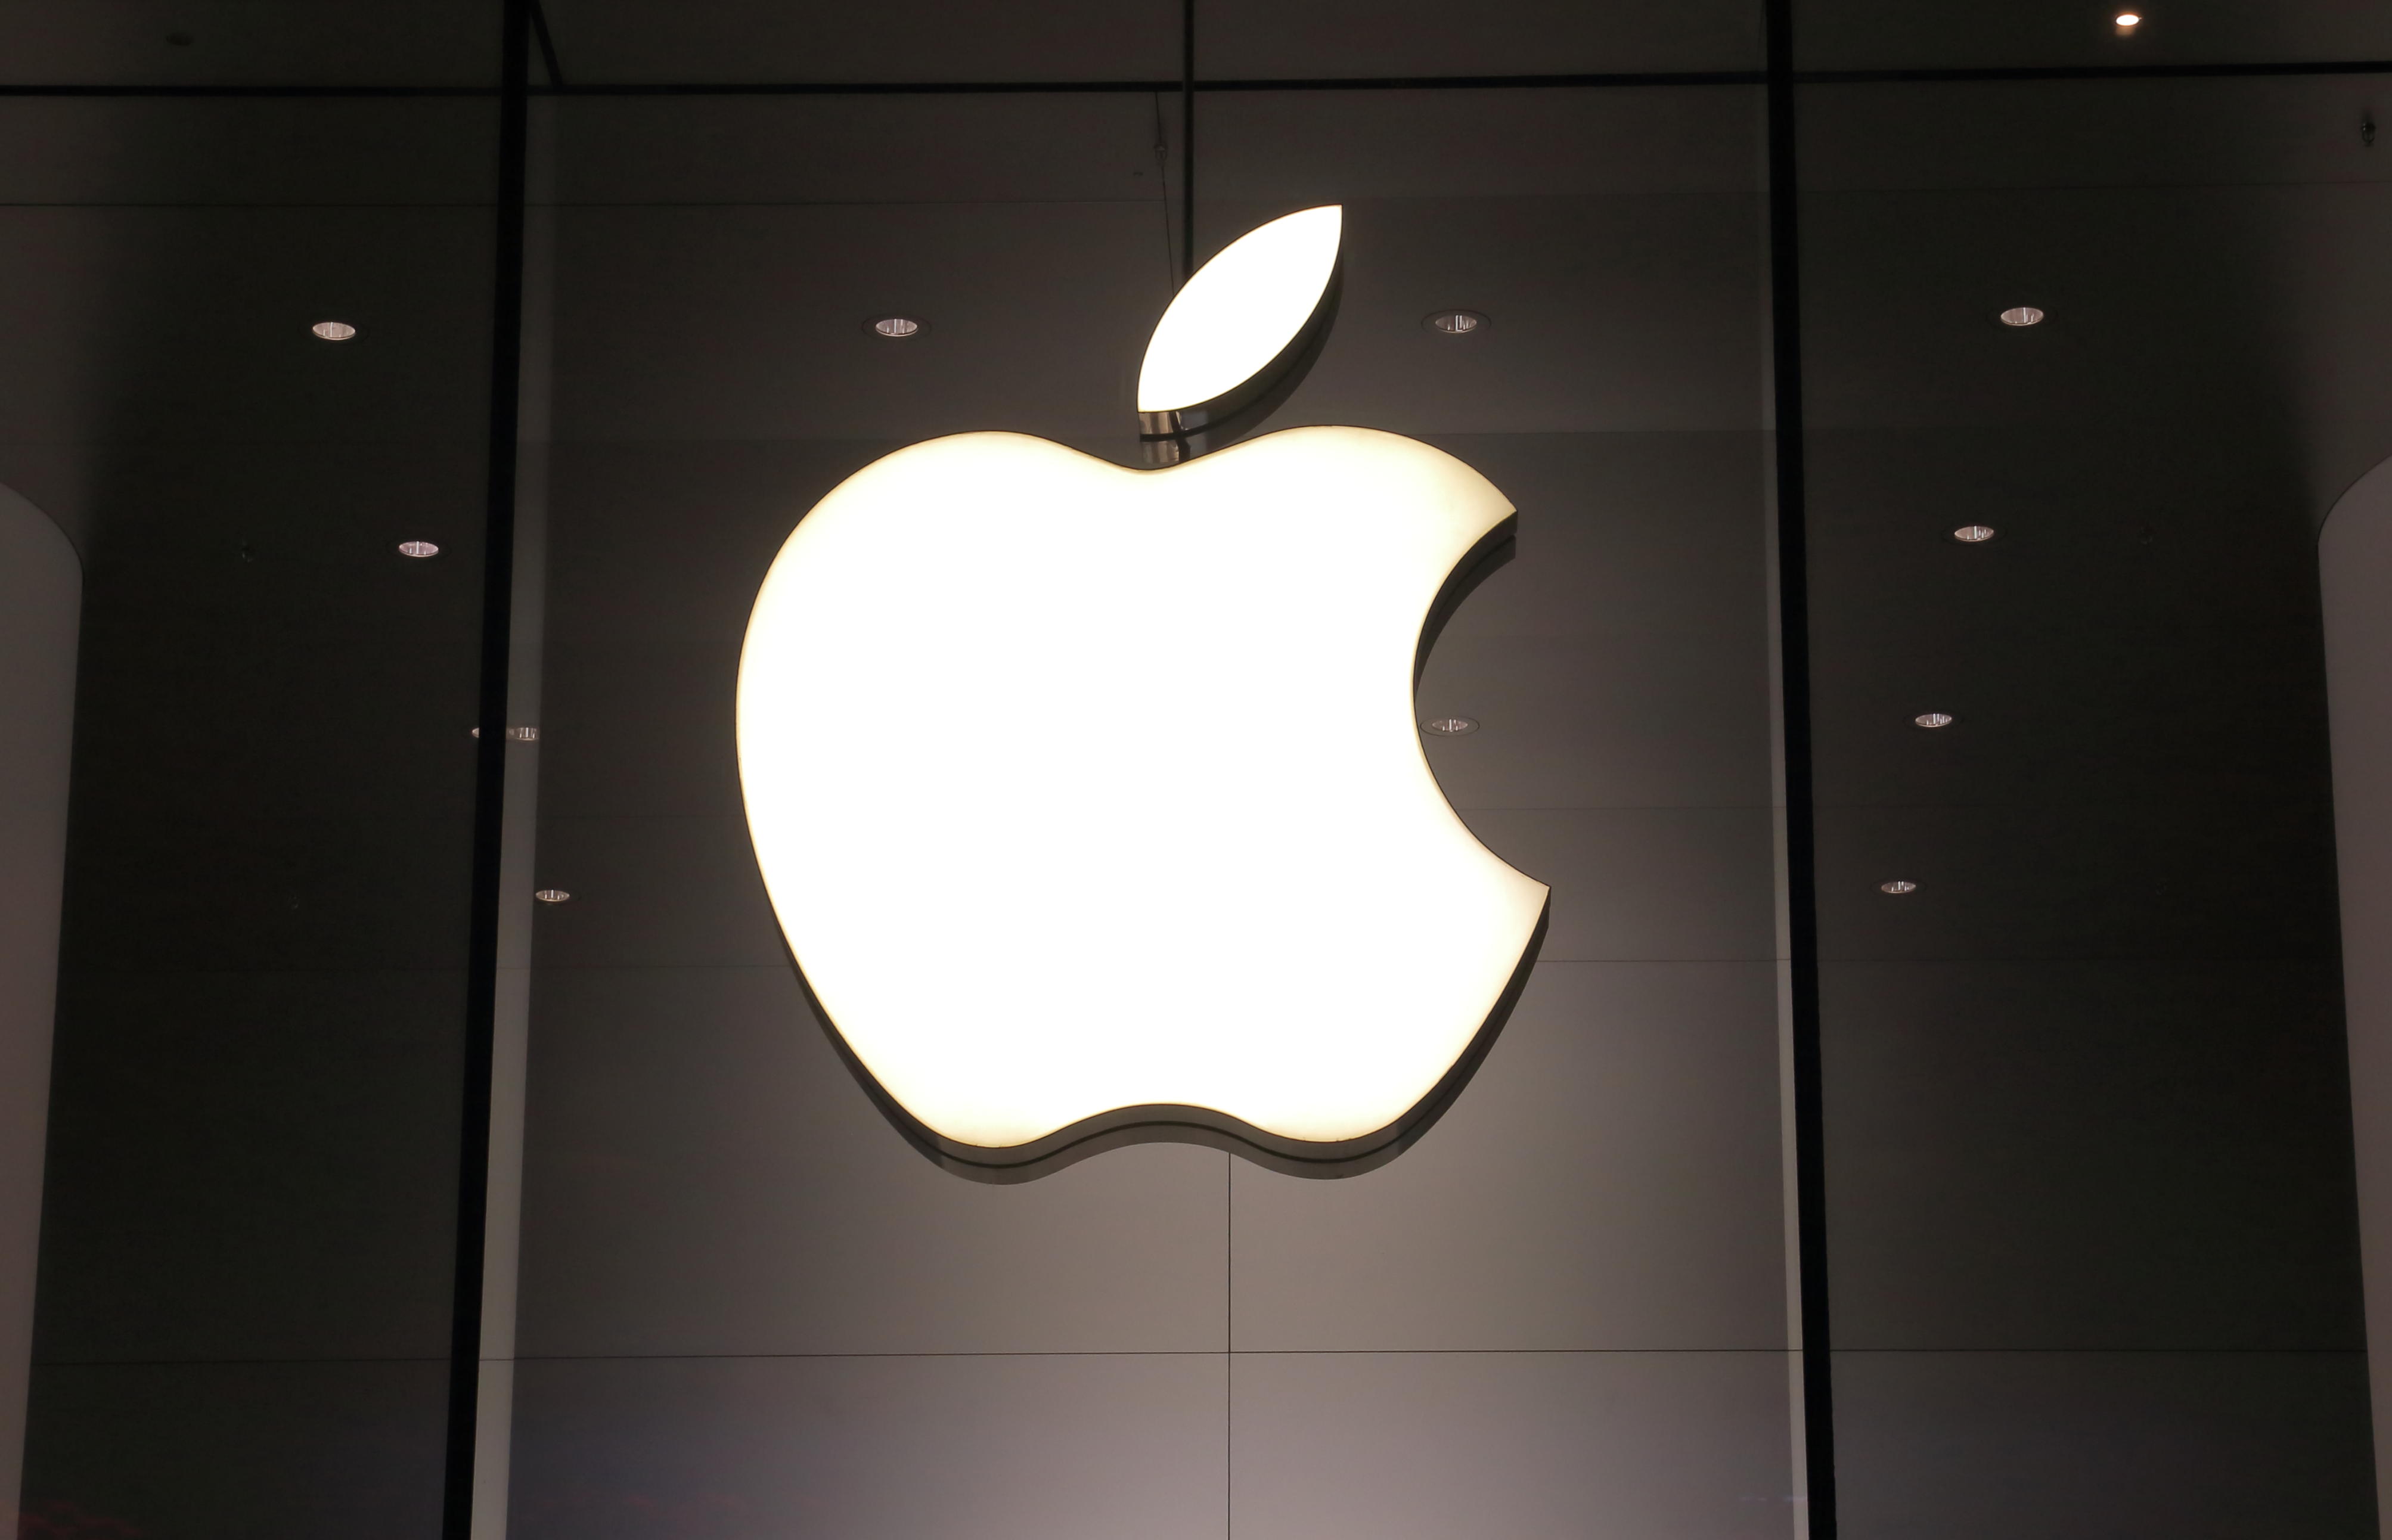 MacStealer Malware Plucks Bushels of Data From Apple Users